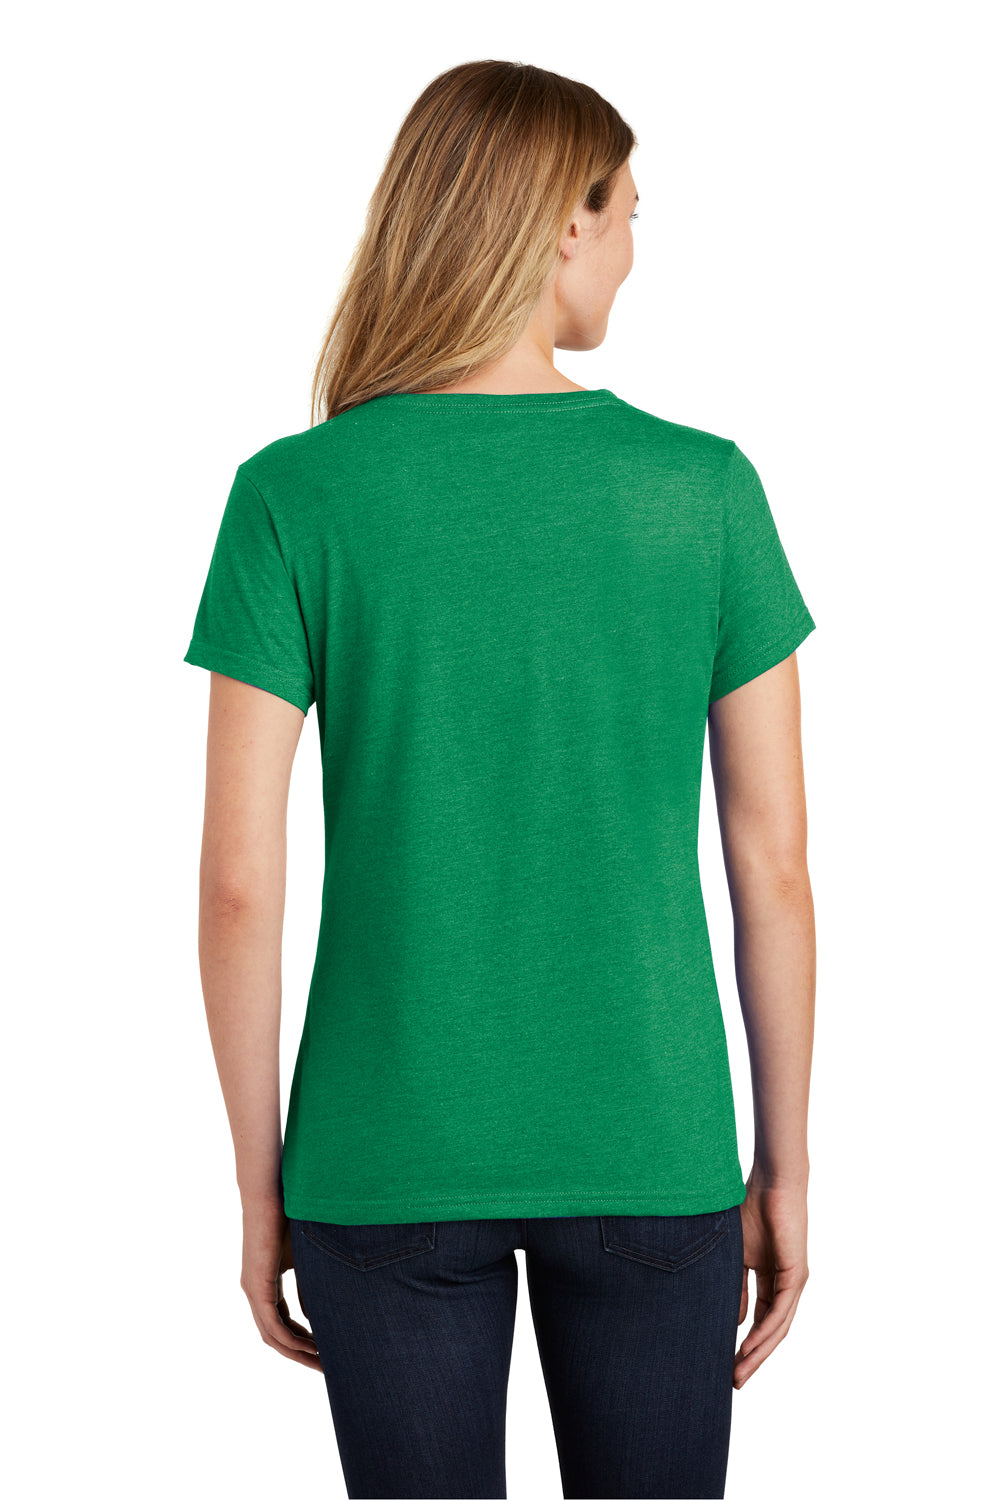 Port & Company LPC455V Womens Fan Favorite Short Sleeve V-Neck T-Shirt Heather Kelly Green Back